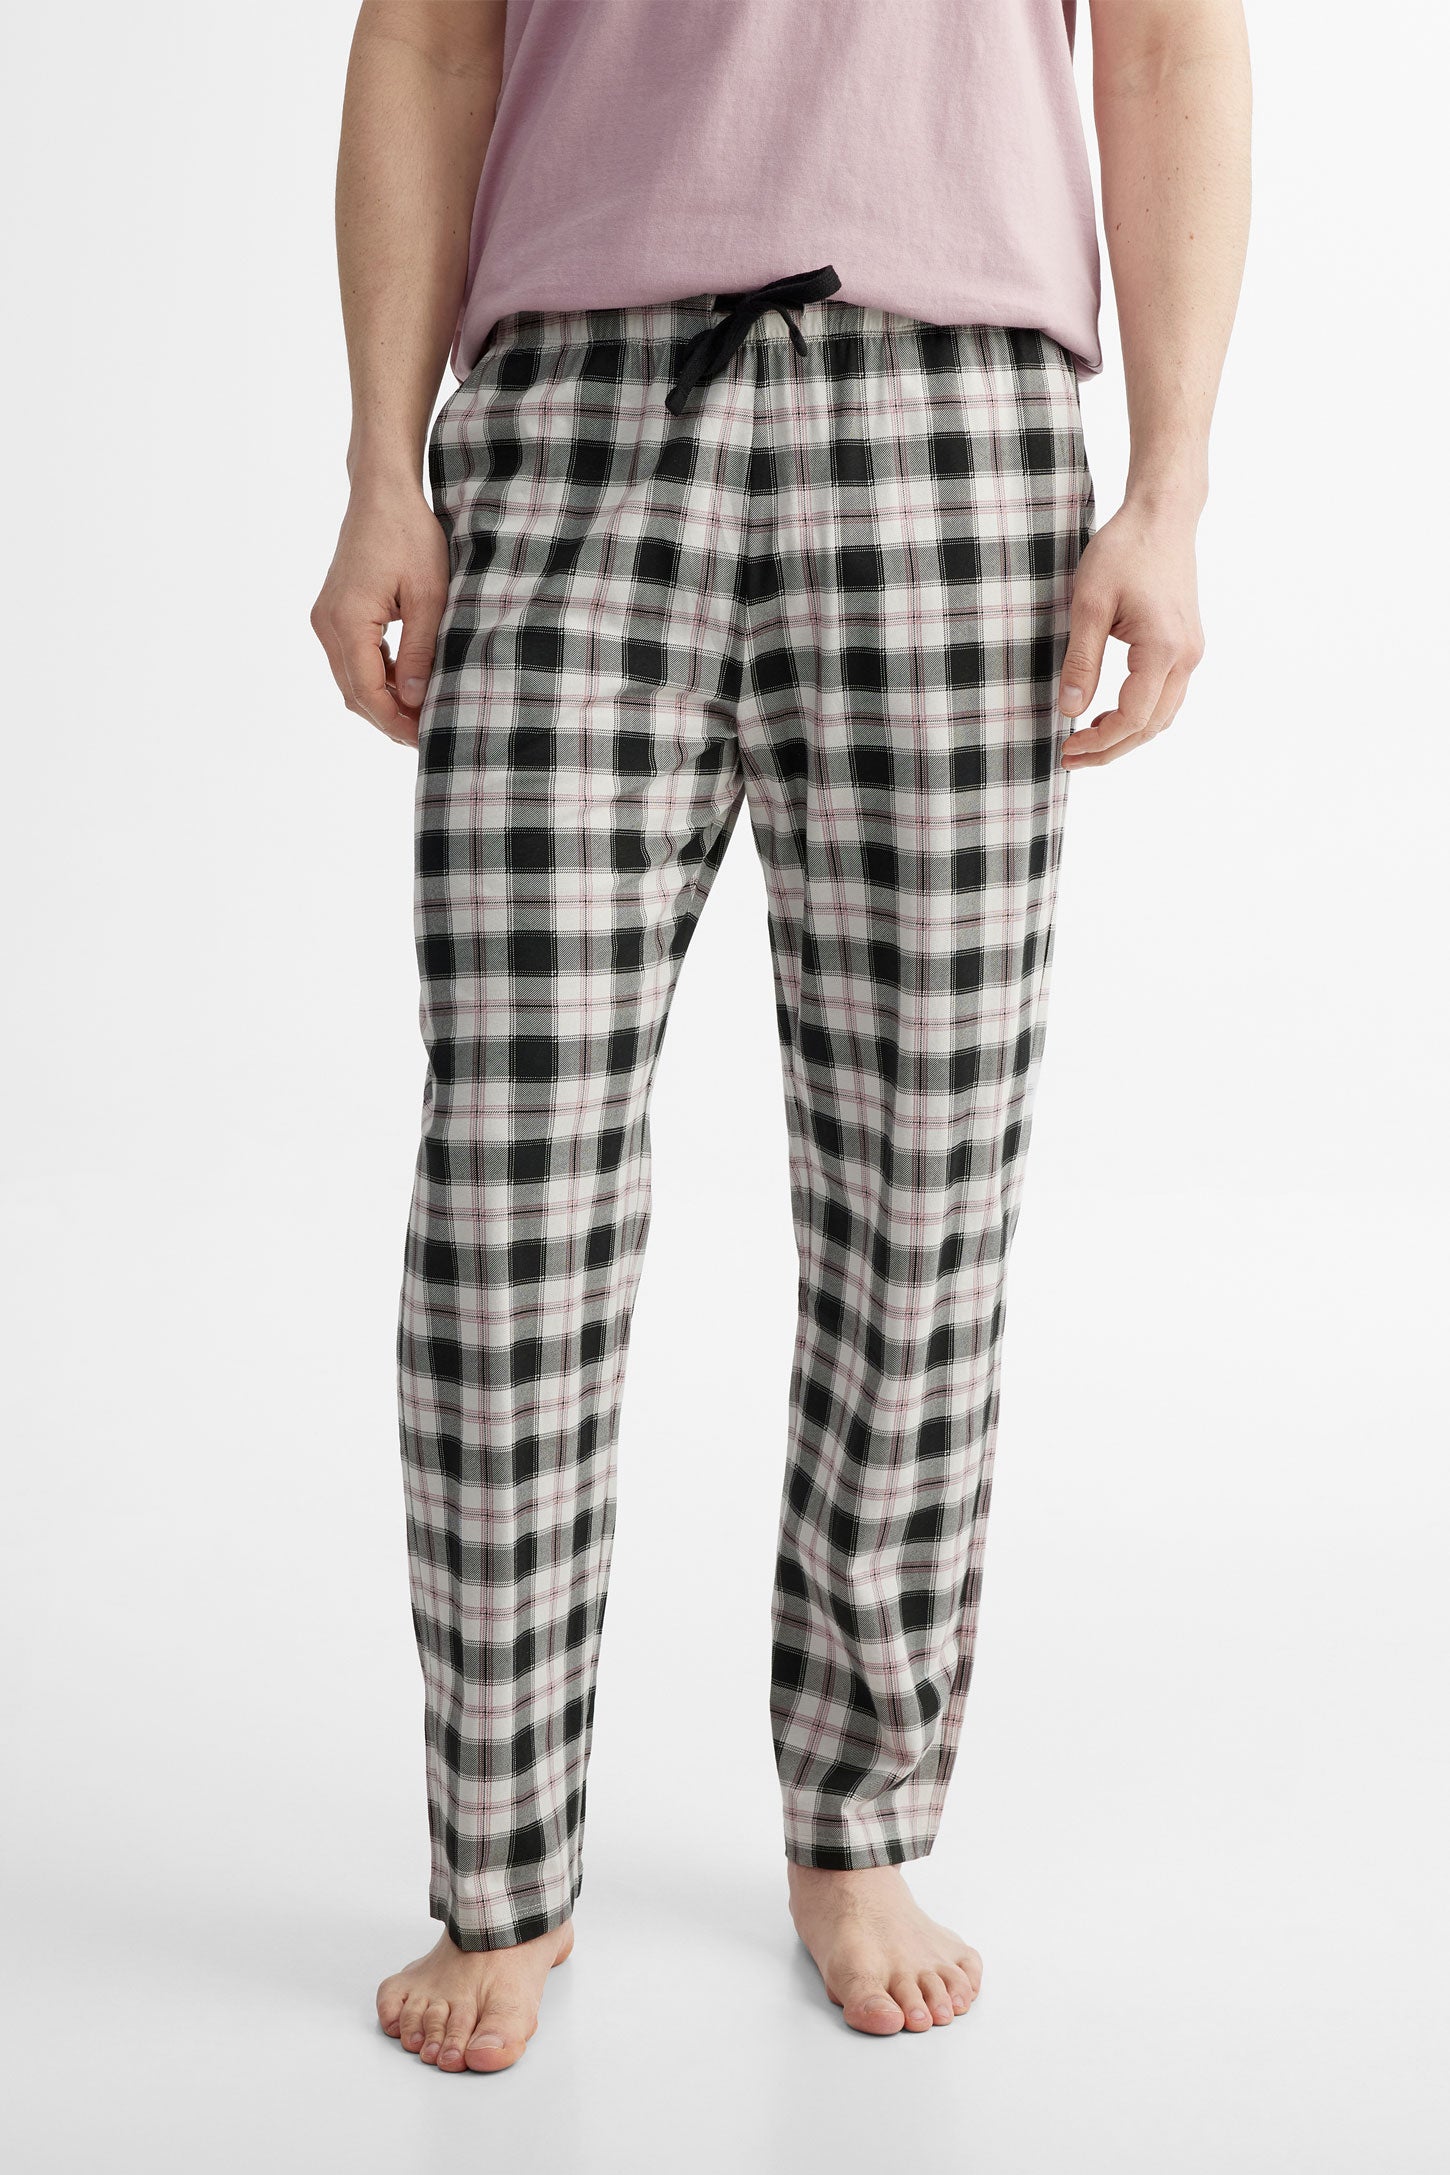 Pantalon pyjama en coton, 2/40$ - Homme && CHARBON/MULTI